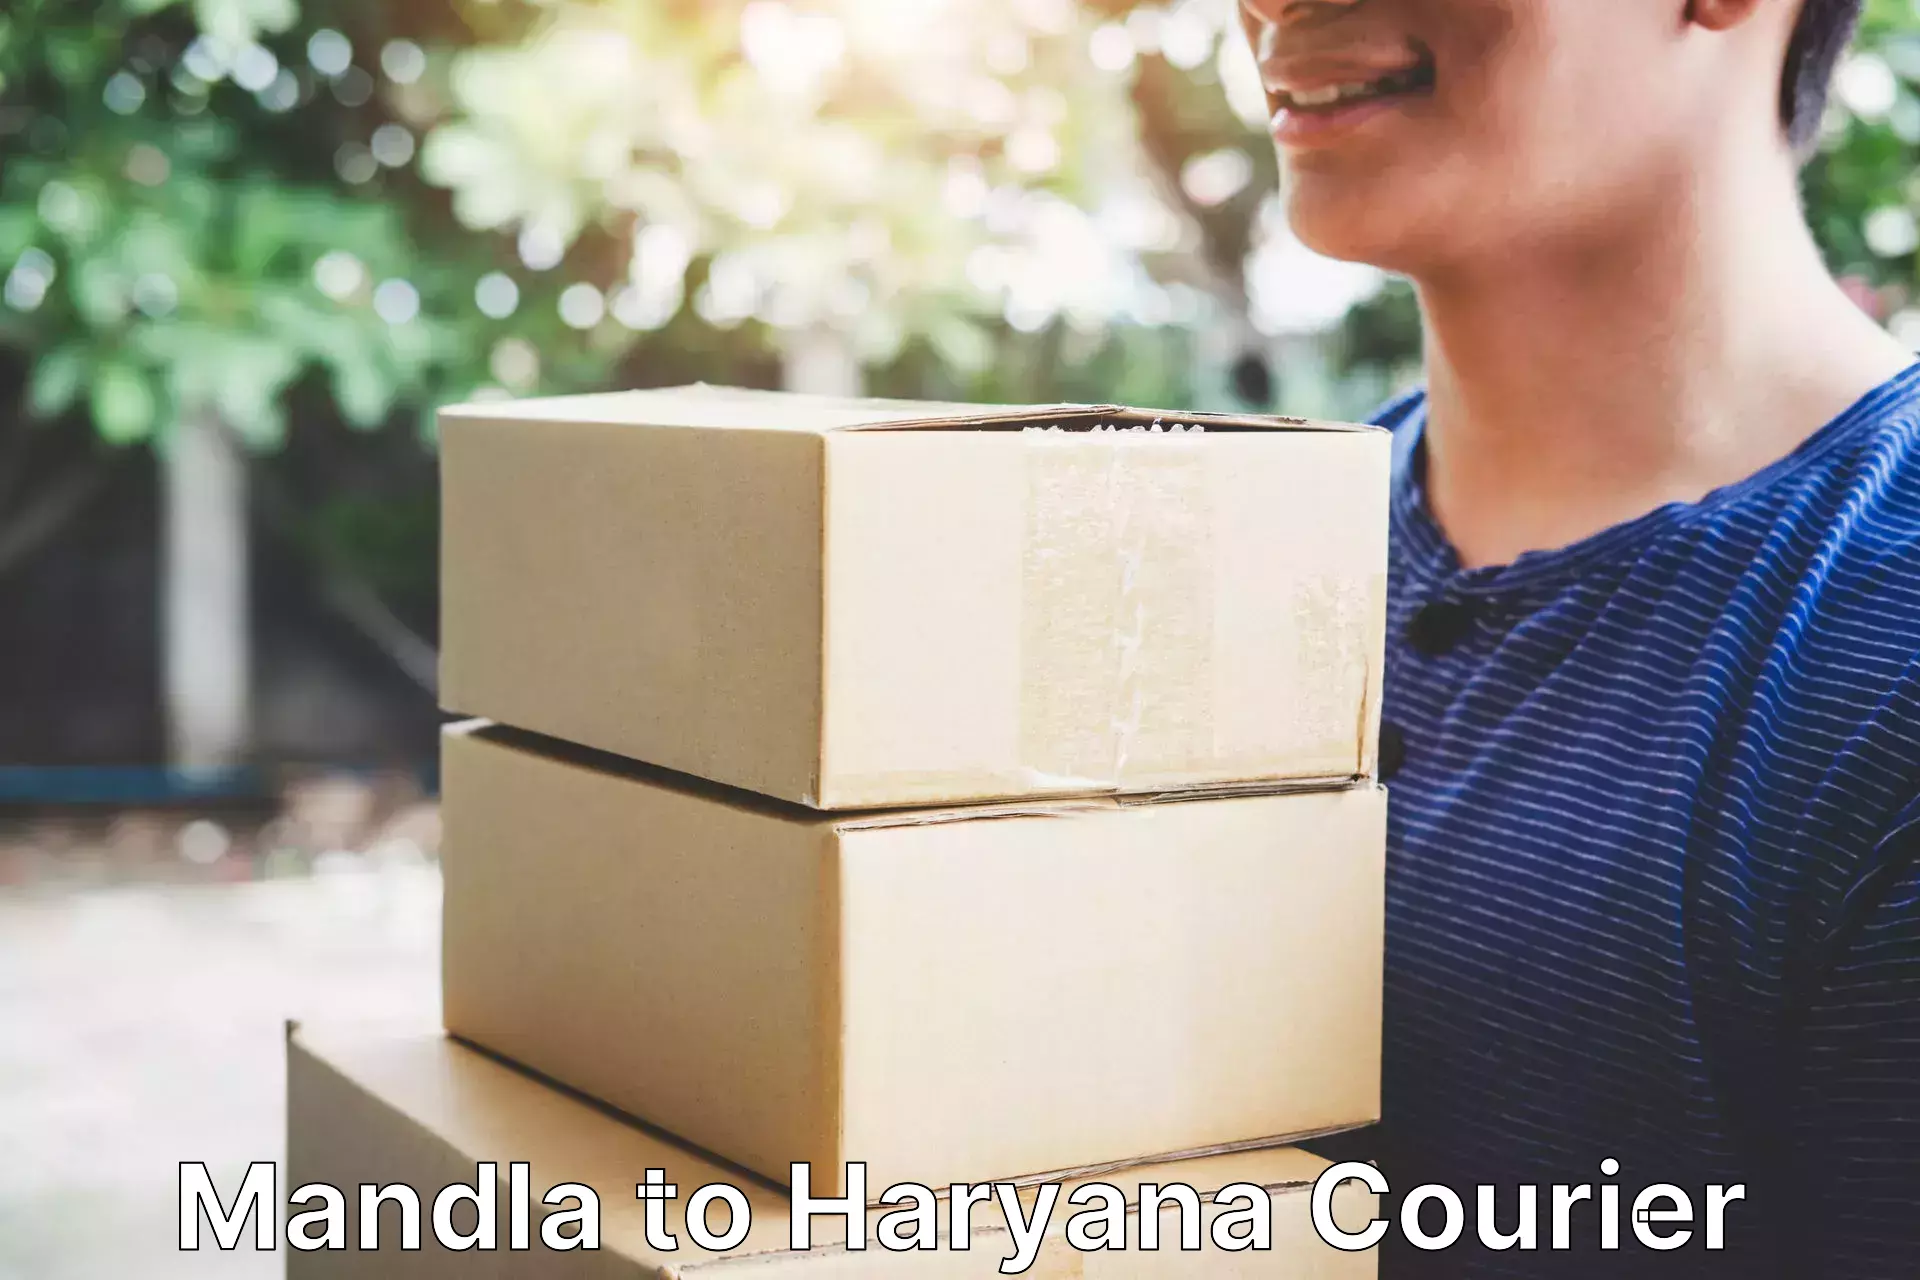 Modern courier technology Mandla to Haryana